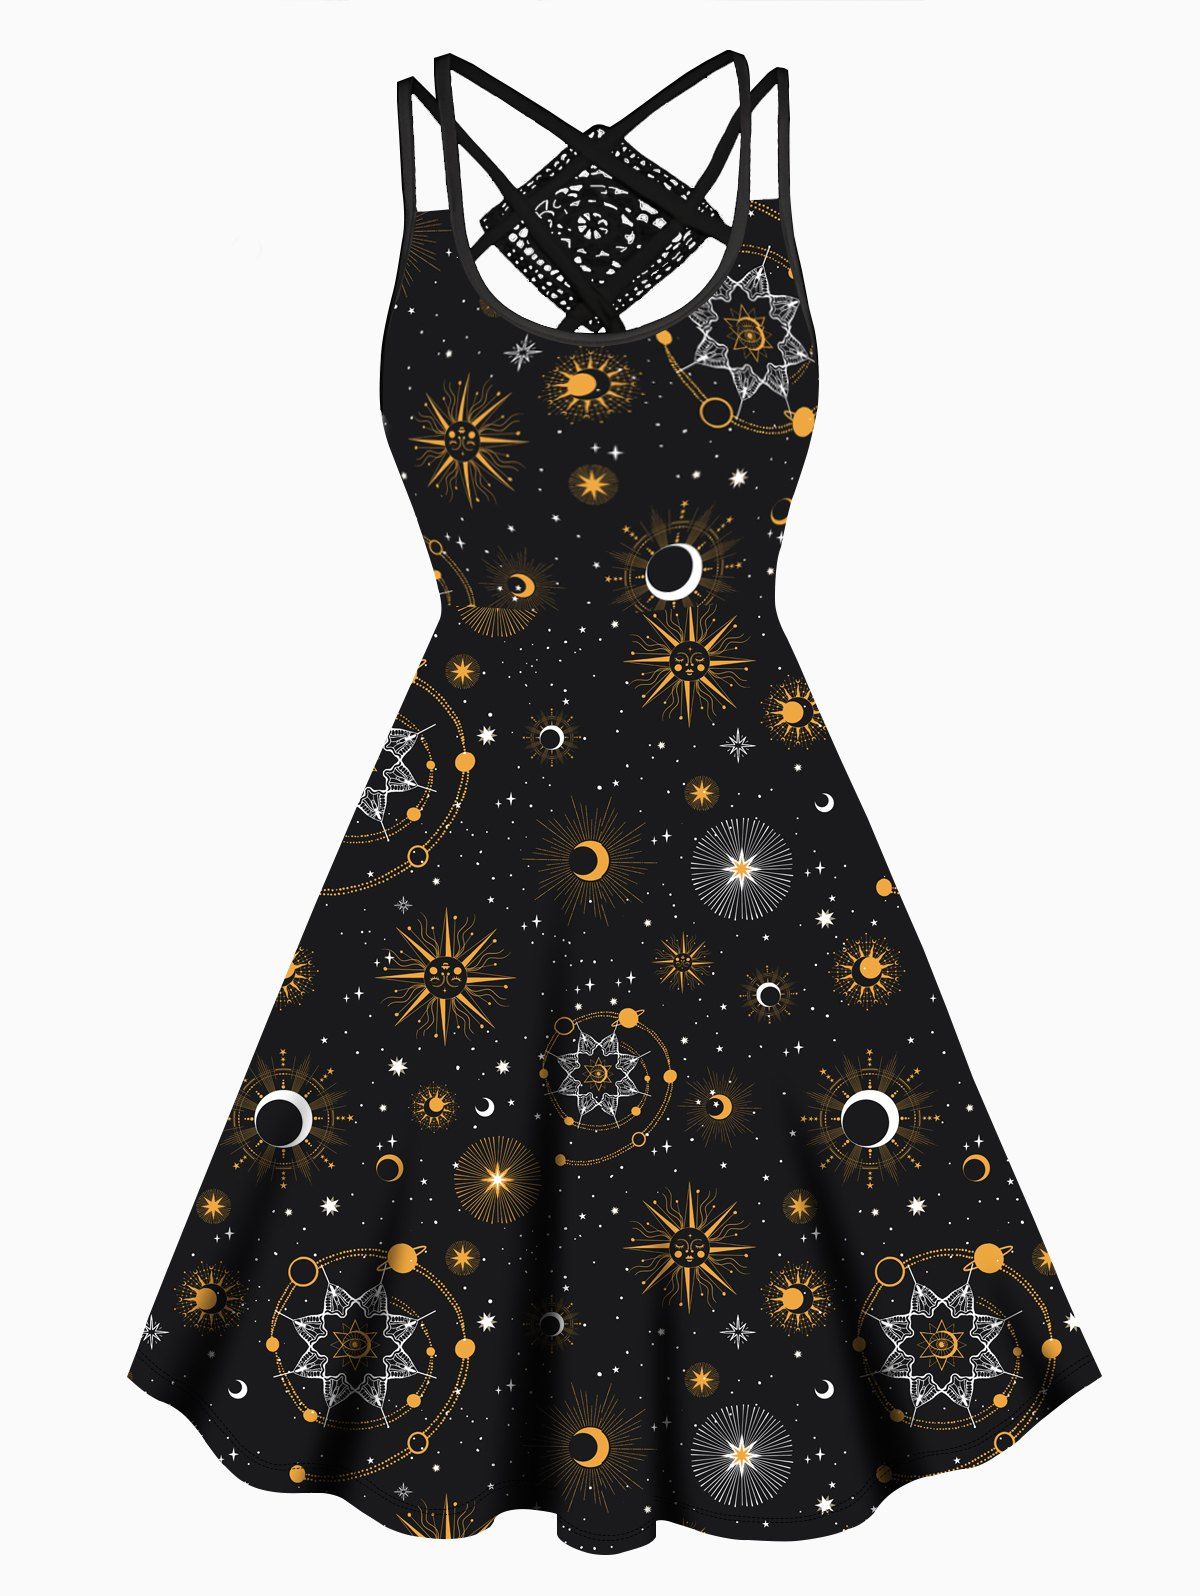 Celestial Galaxy Sun Moon Star Print Dress Lace Panel Crisscross High Waisted Sleeveless A Line Midi Dress - BLACK S